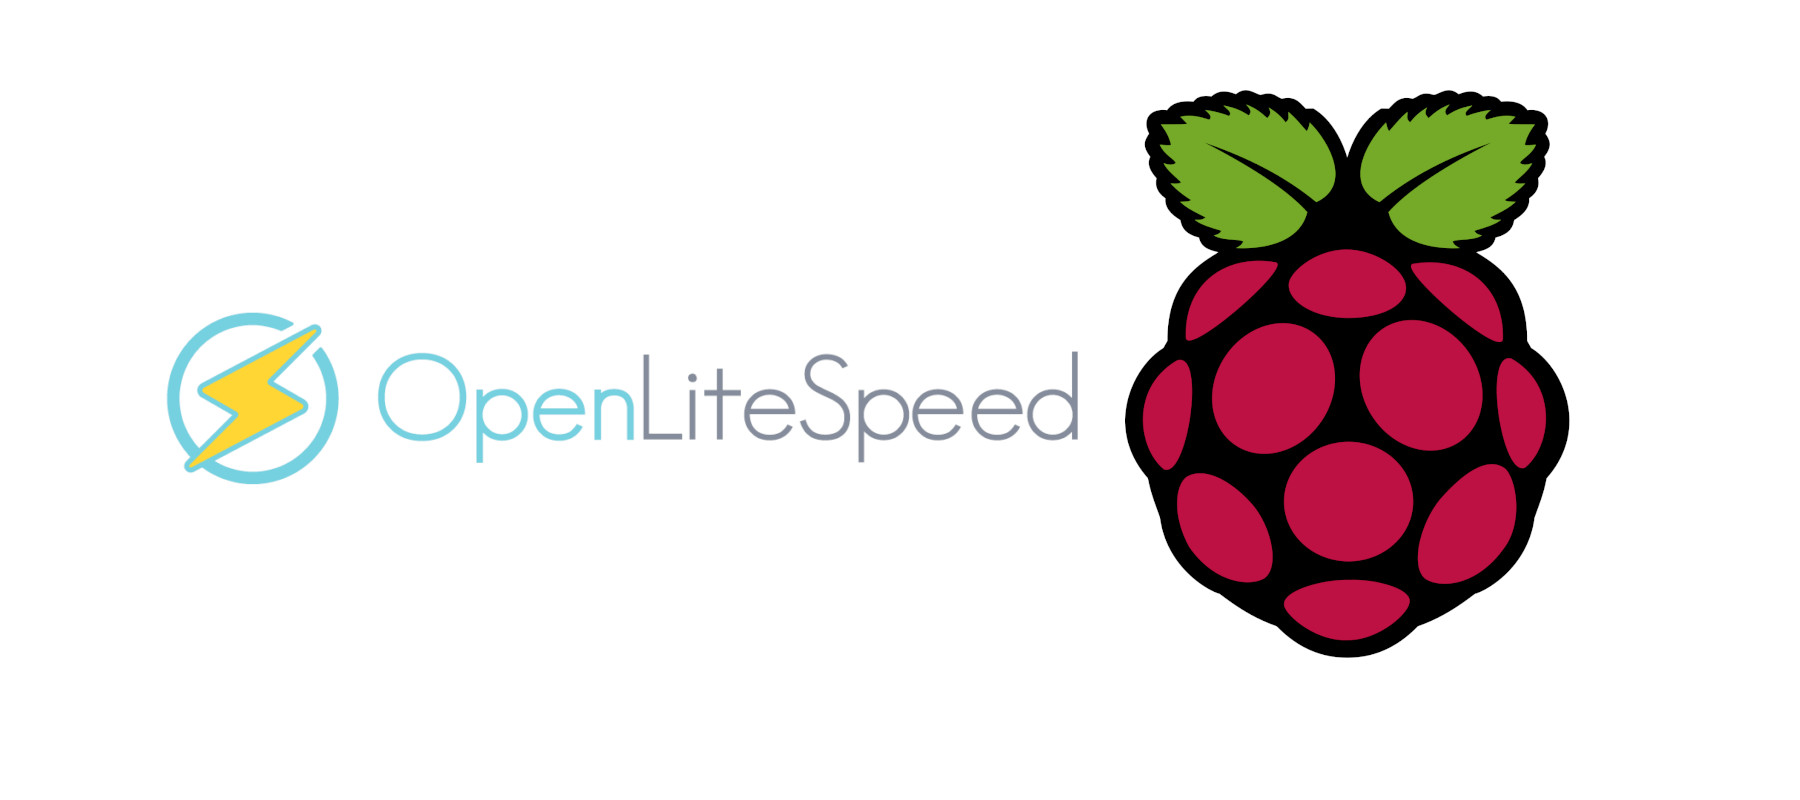 openlitespeed-raspberry-pi-featured-image